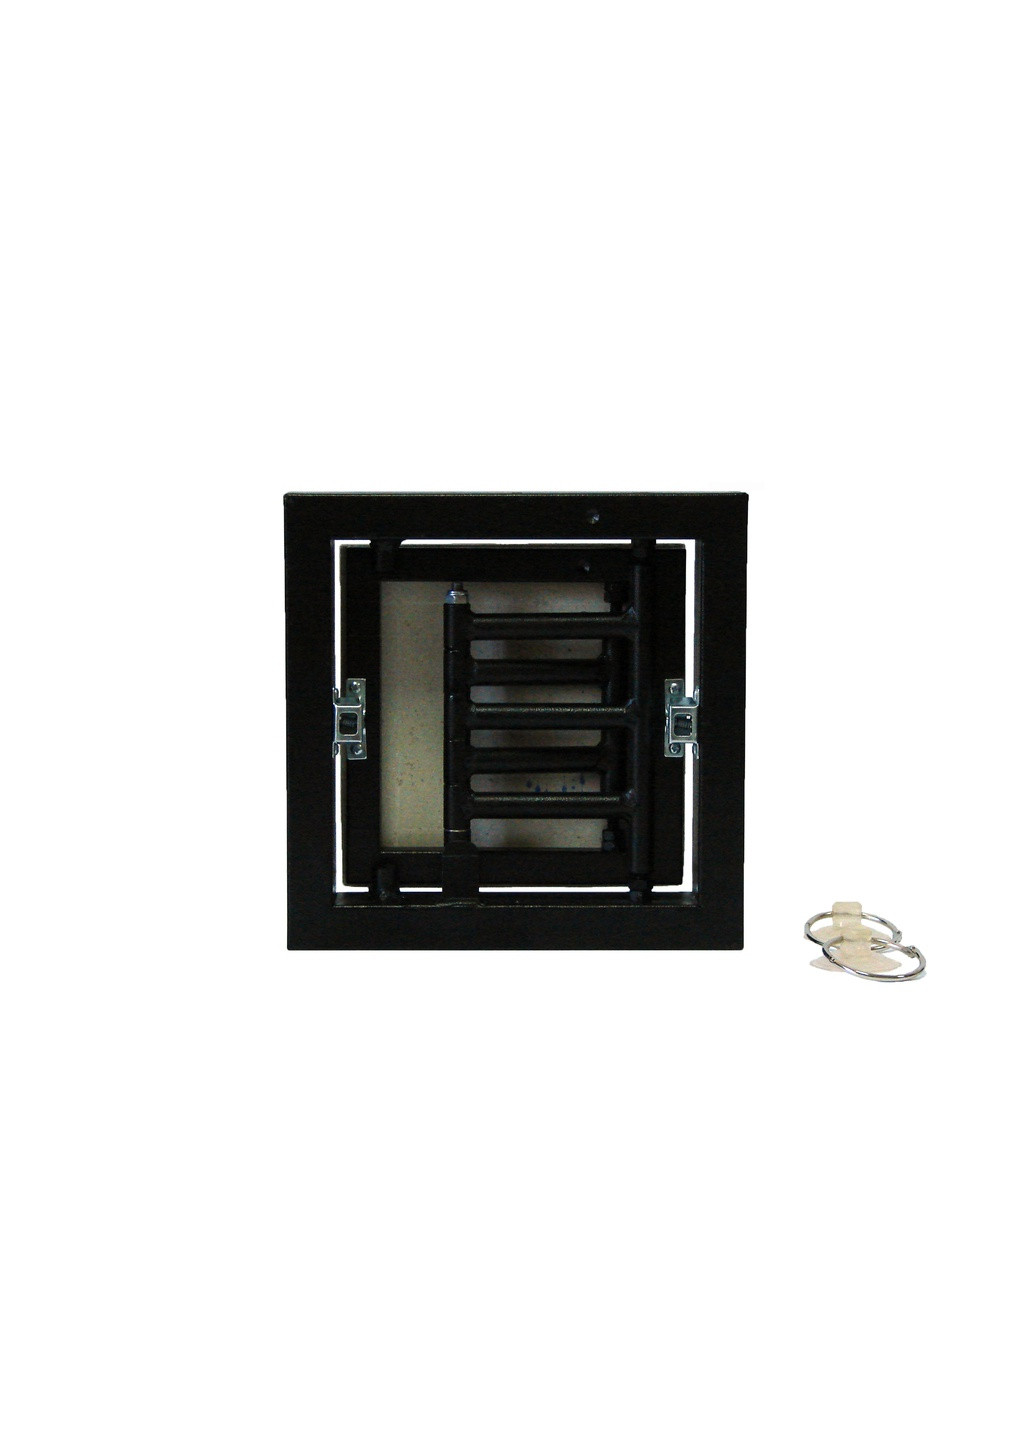 Ревизионный люк скрытого монтажа под плитку фронтальнораспашного типа 250x250 ревизионная дверца для плитки (1214) S-Dom (264208758)